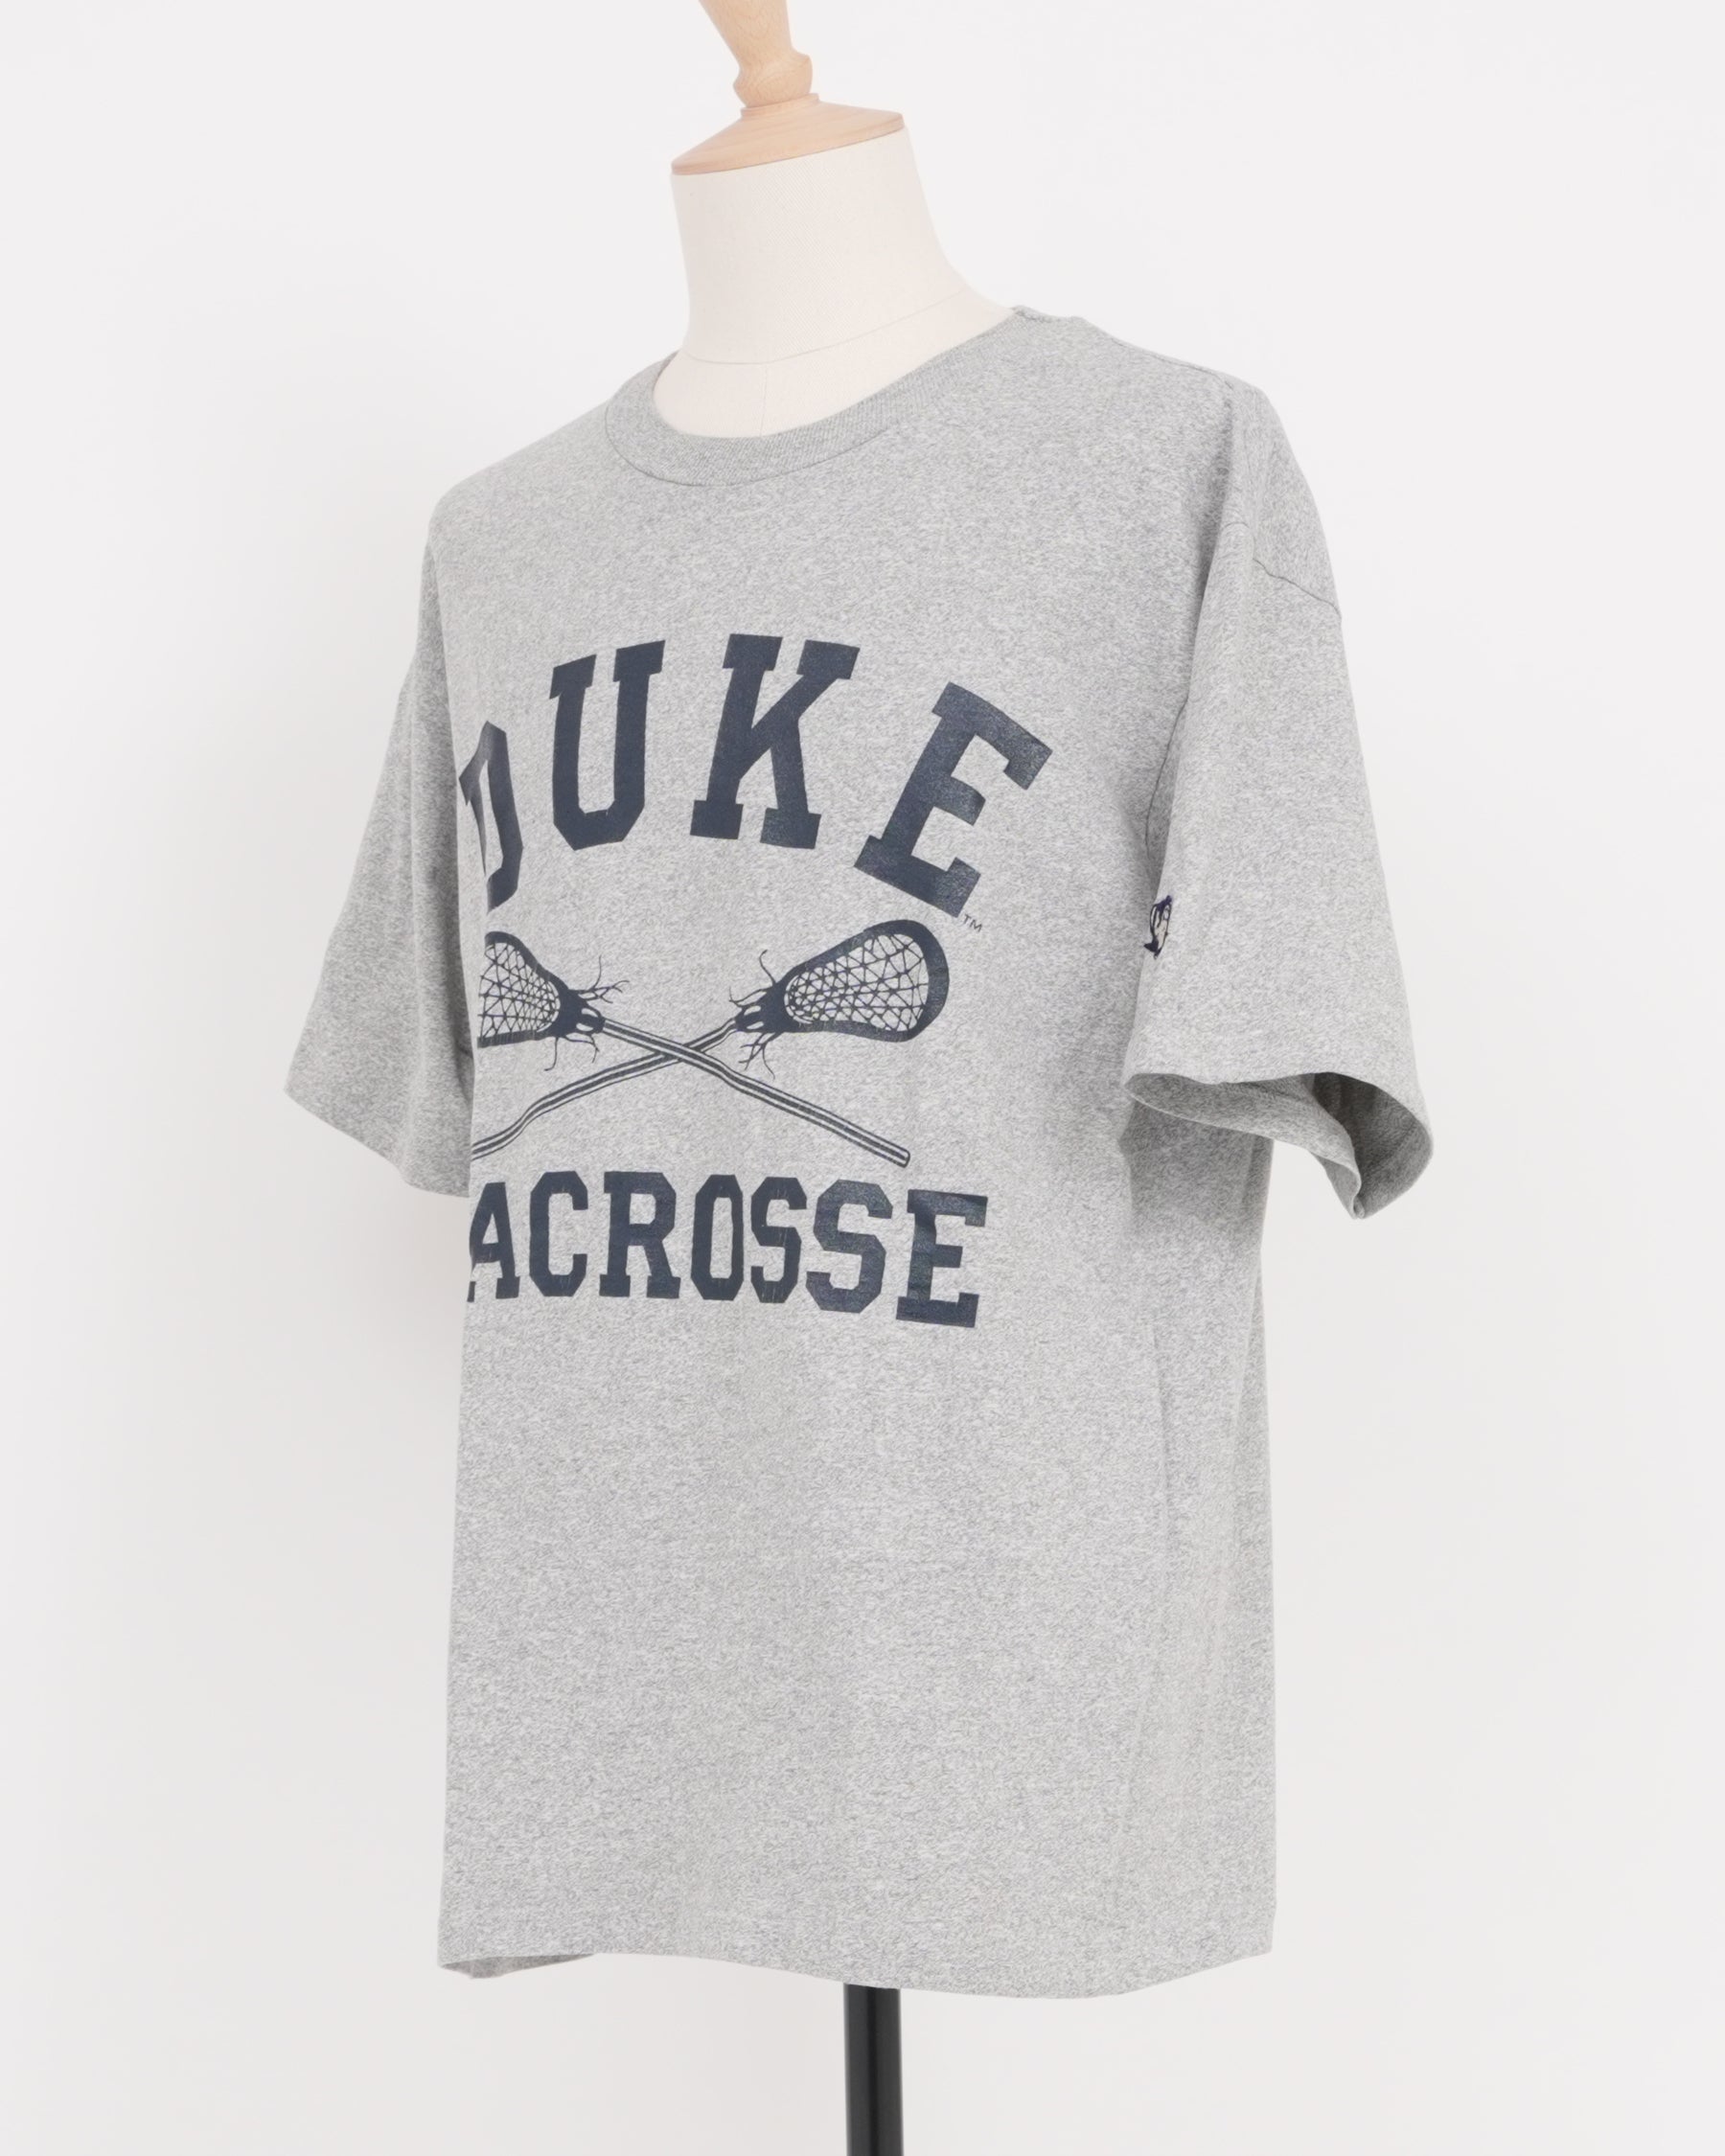 Duke Lacrosse Printed T-shirt